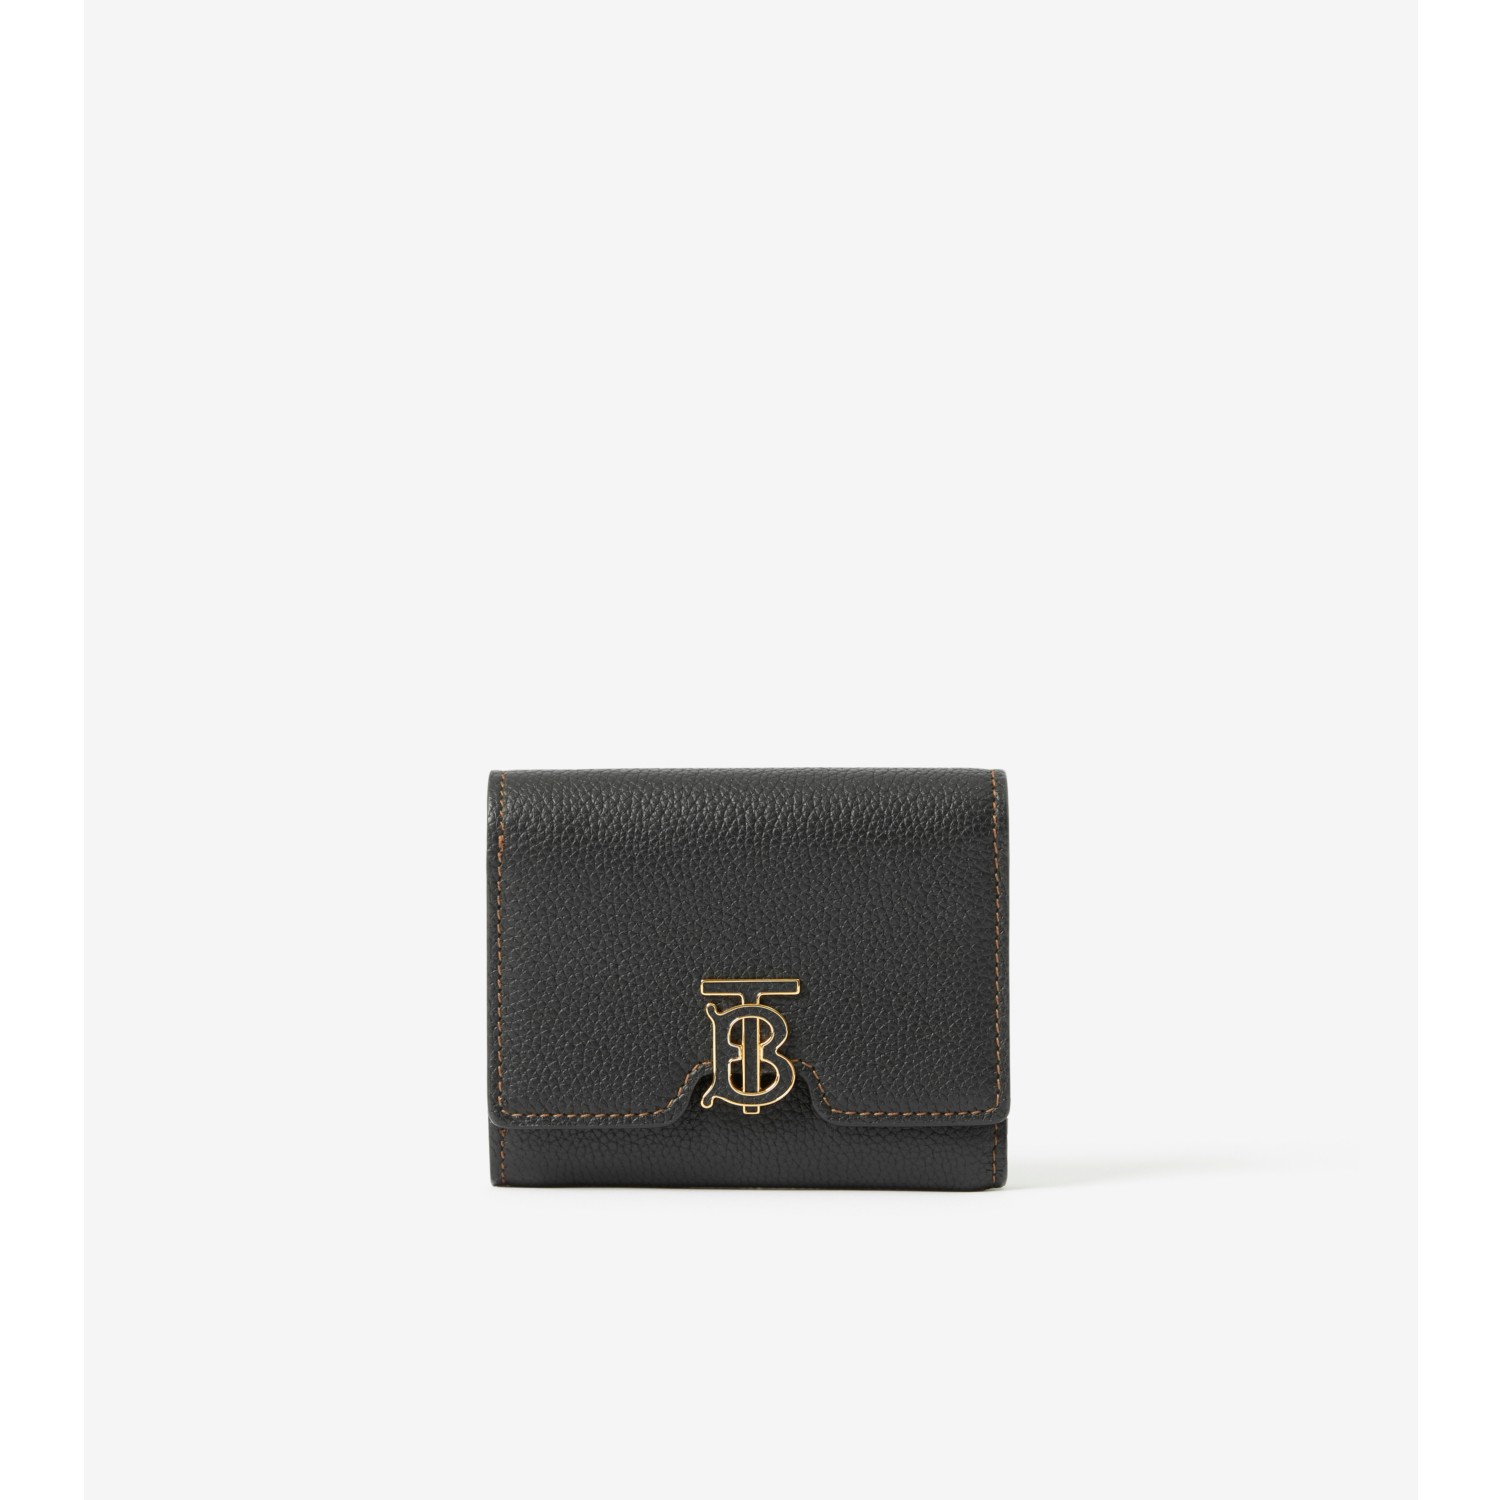 Burberry TB Monogram Grainy Leather Wallet Black